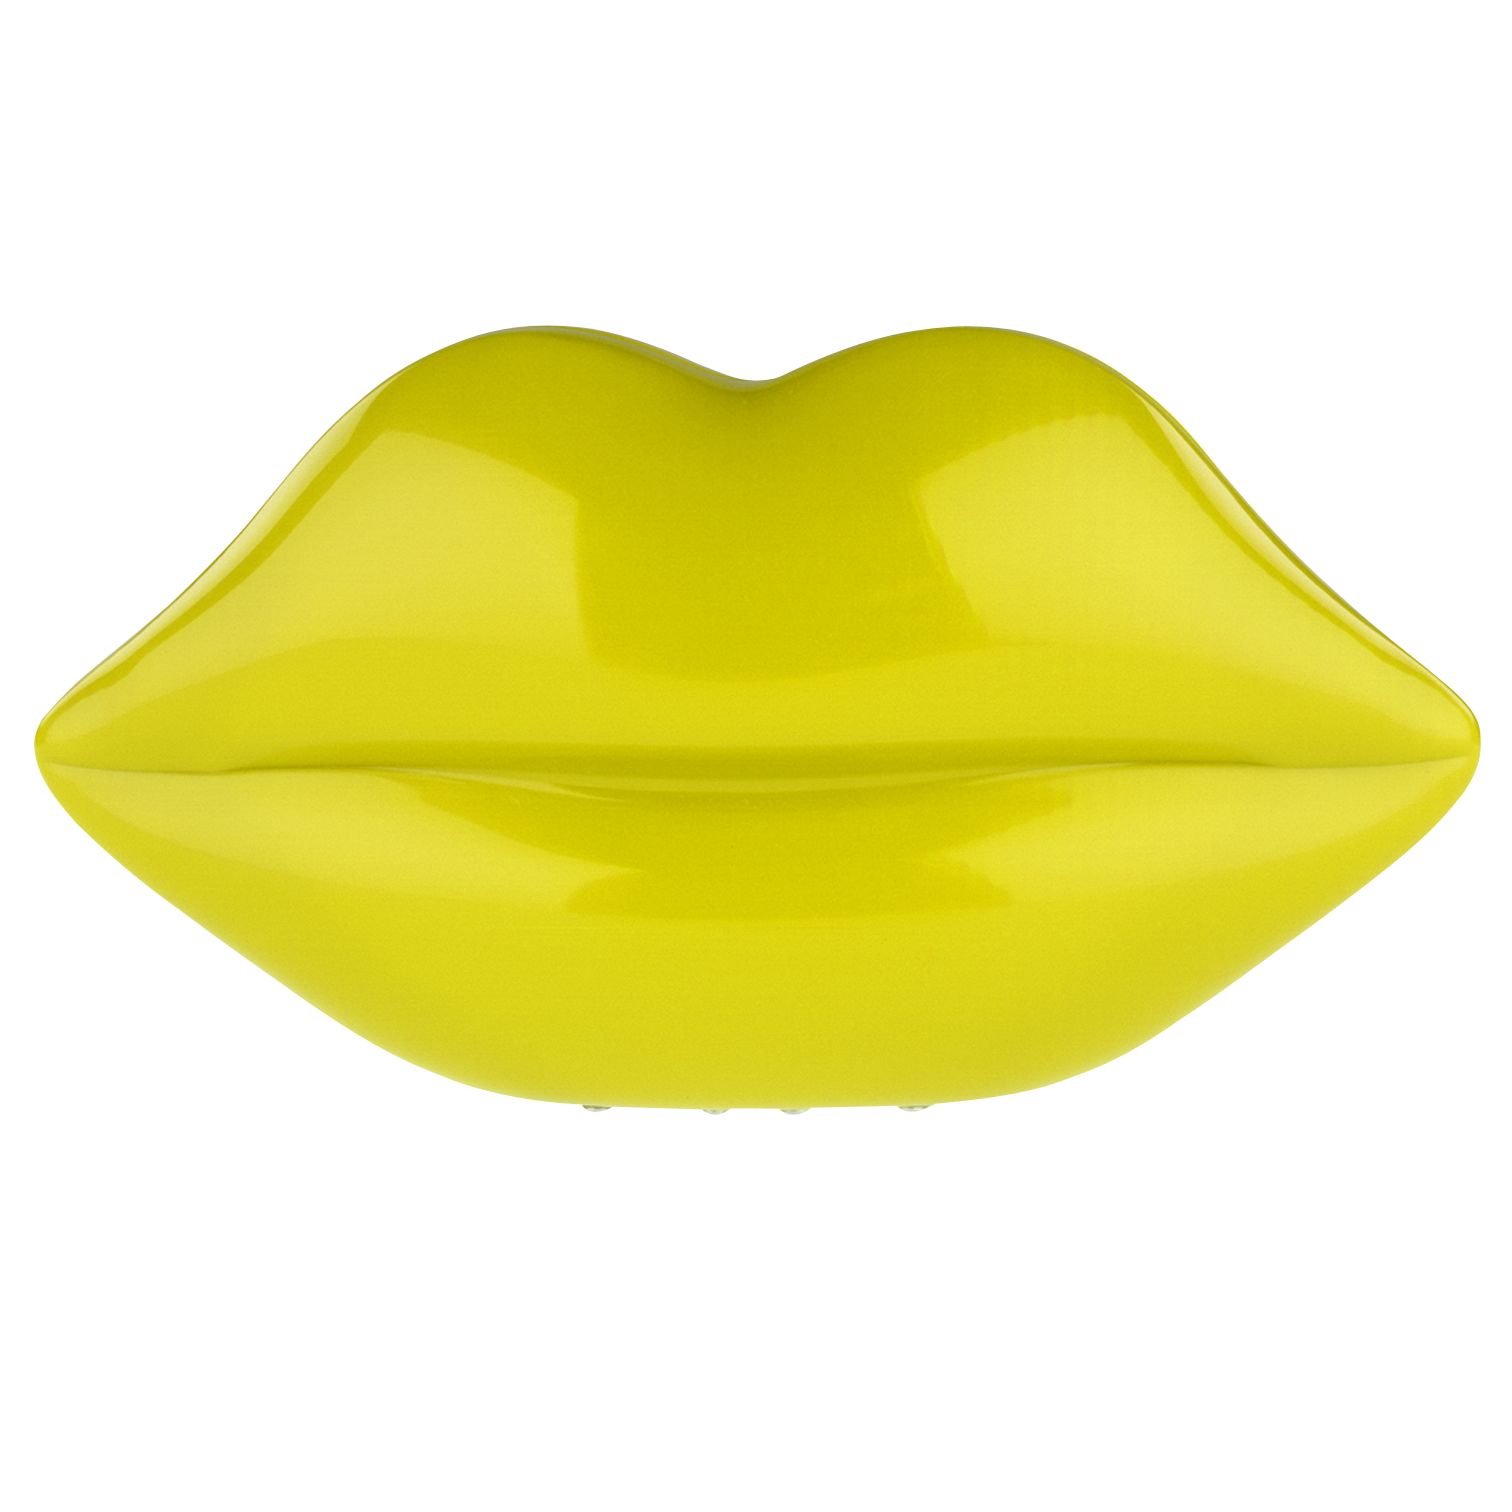 Lulu Guinness Perspex Lips Clutch Handbag, Yellow at John Lewis